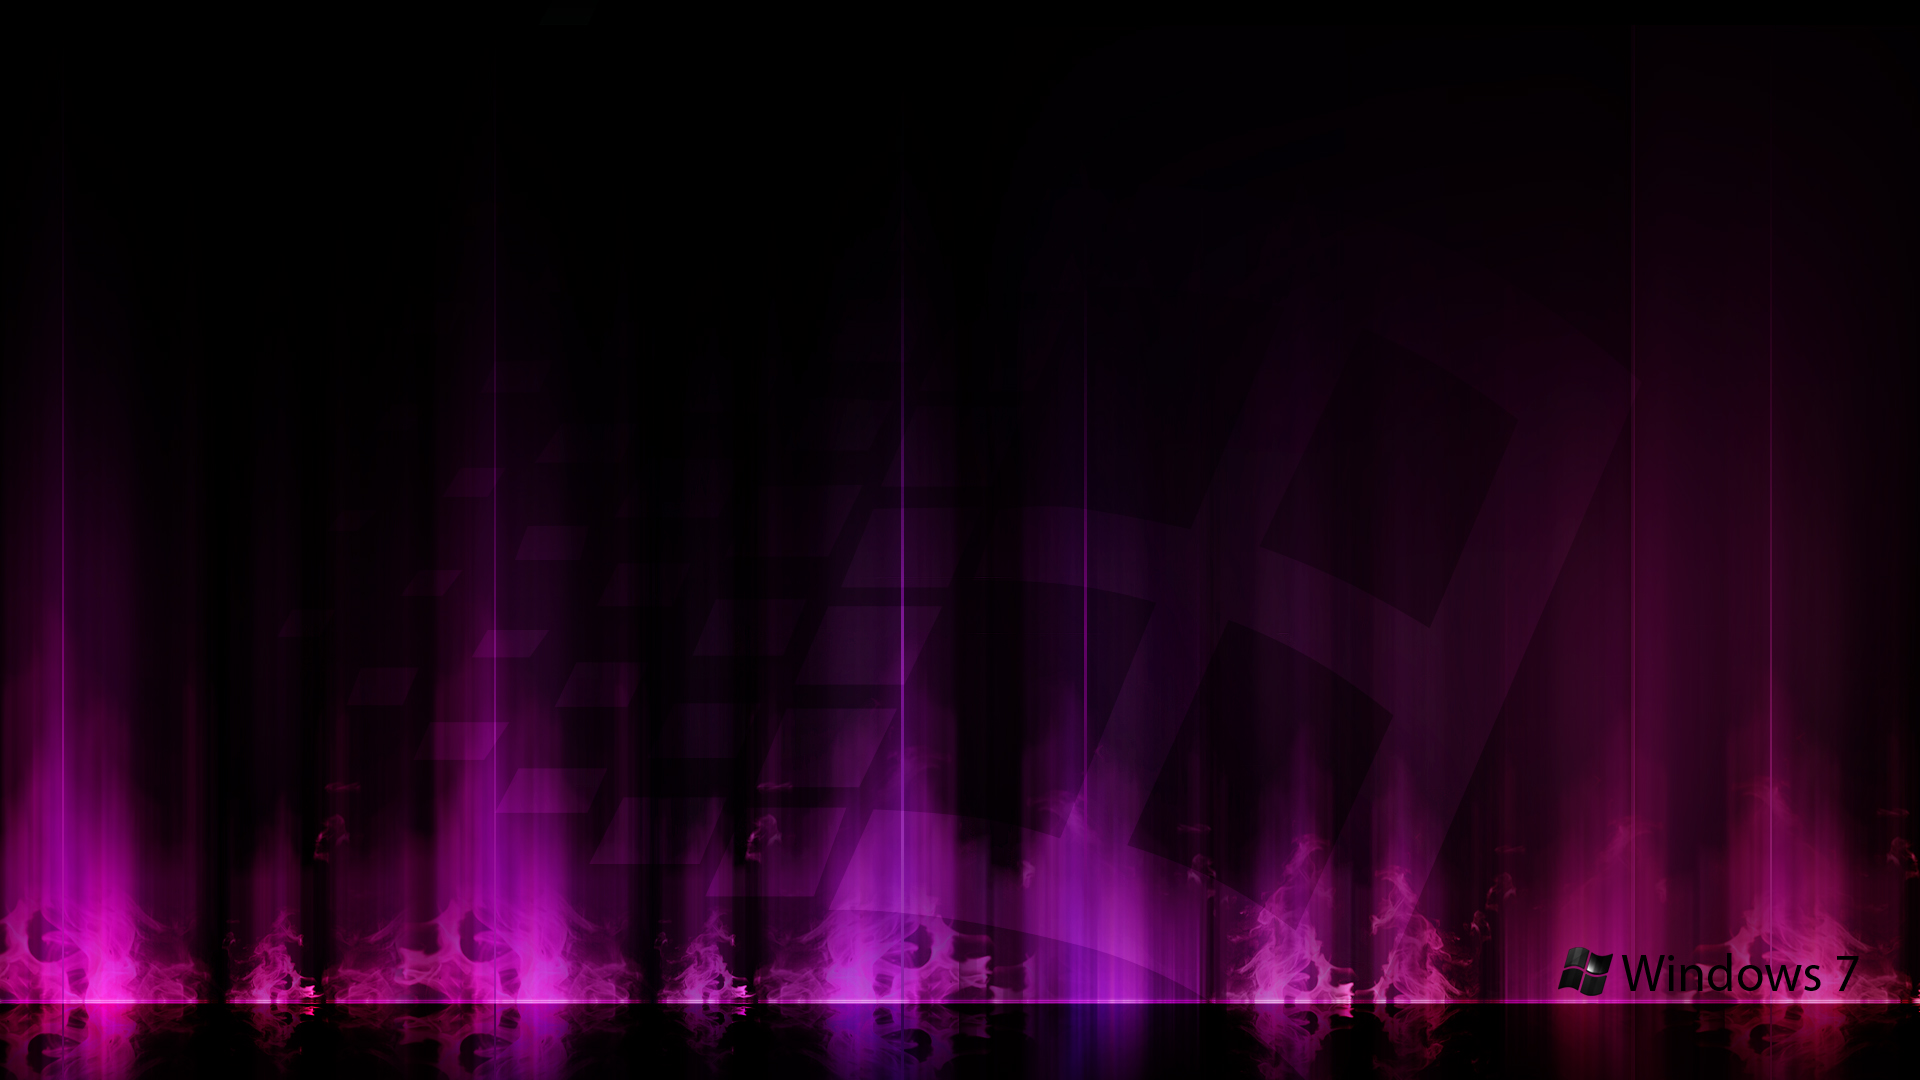 Windows 7 Purple Aurora Wallpapers HD Wallpapers 1920x1080